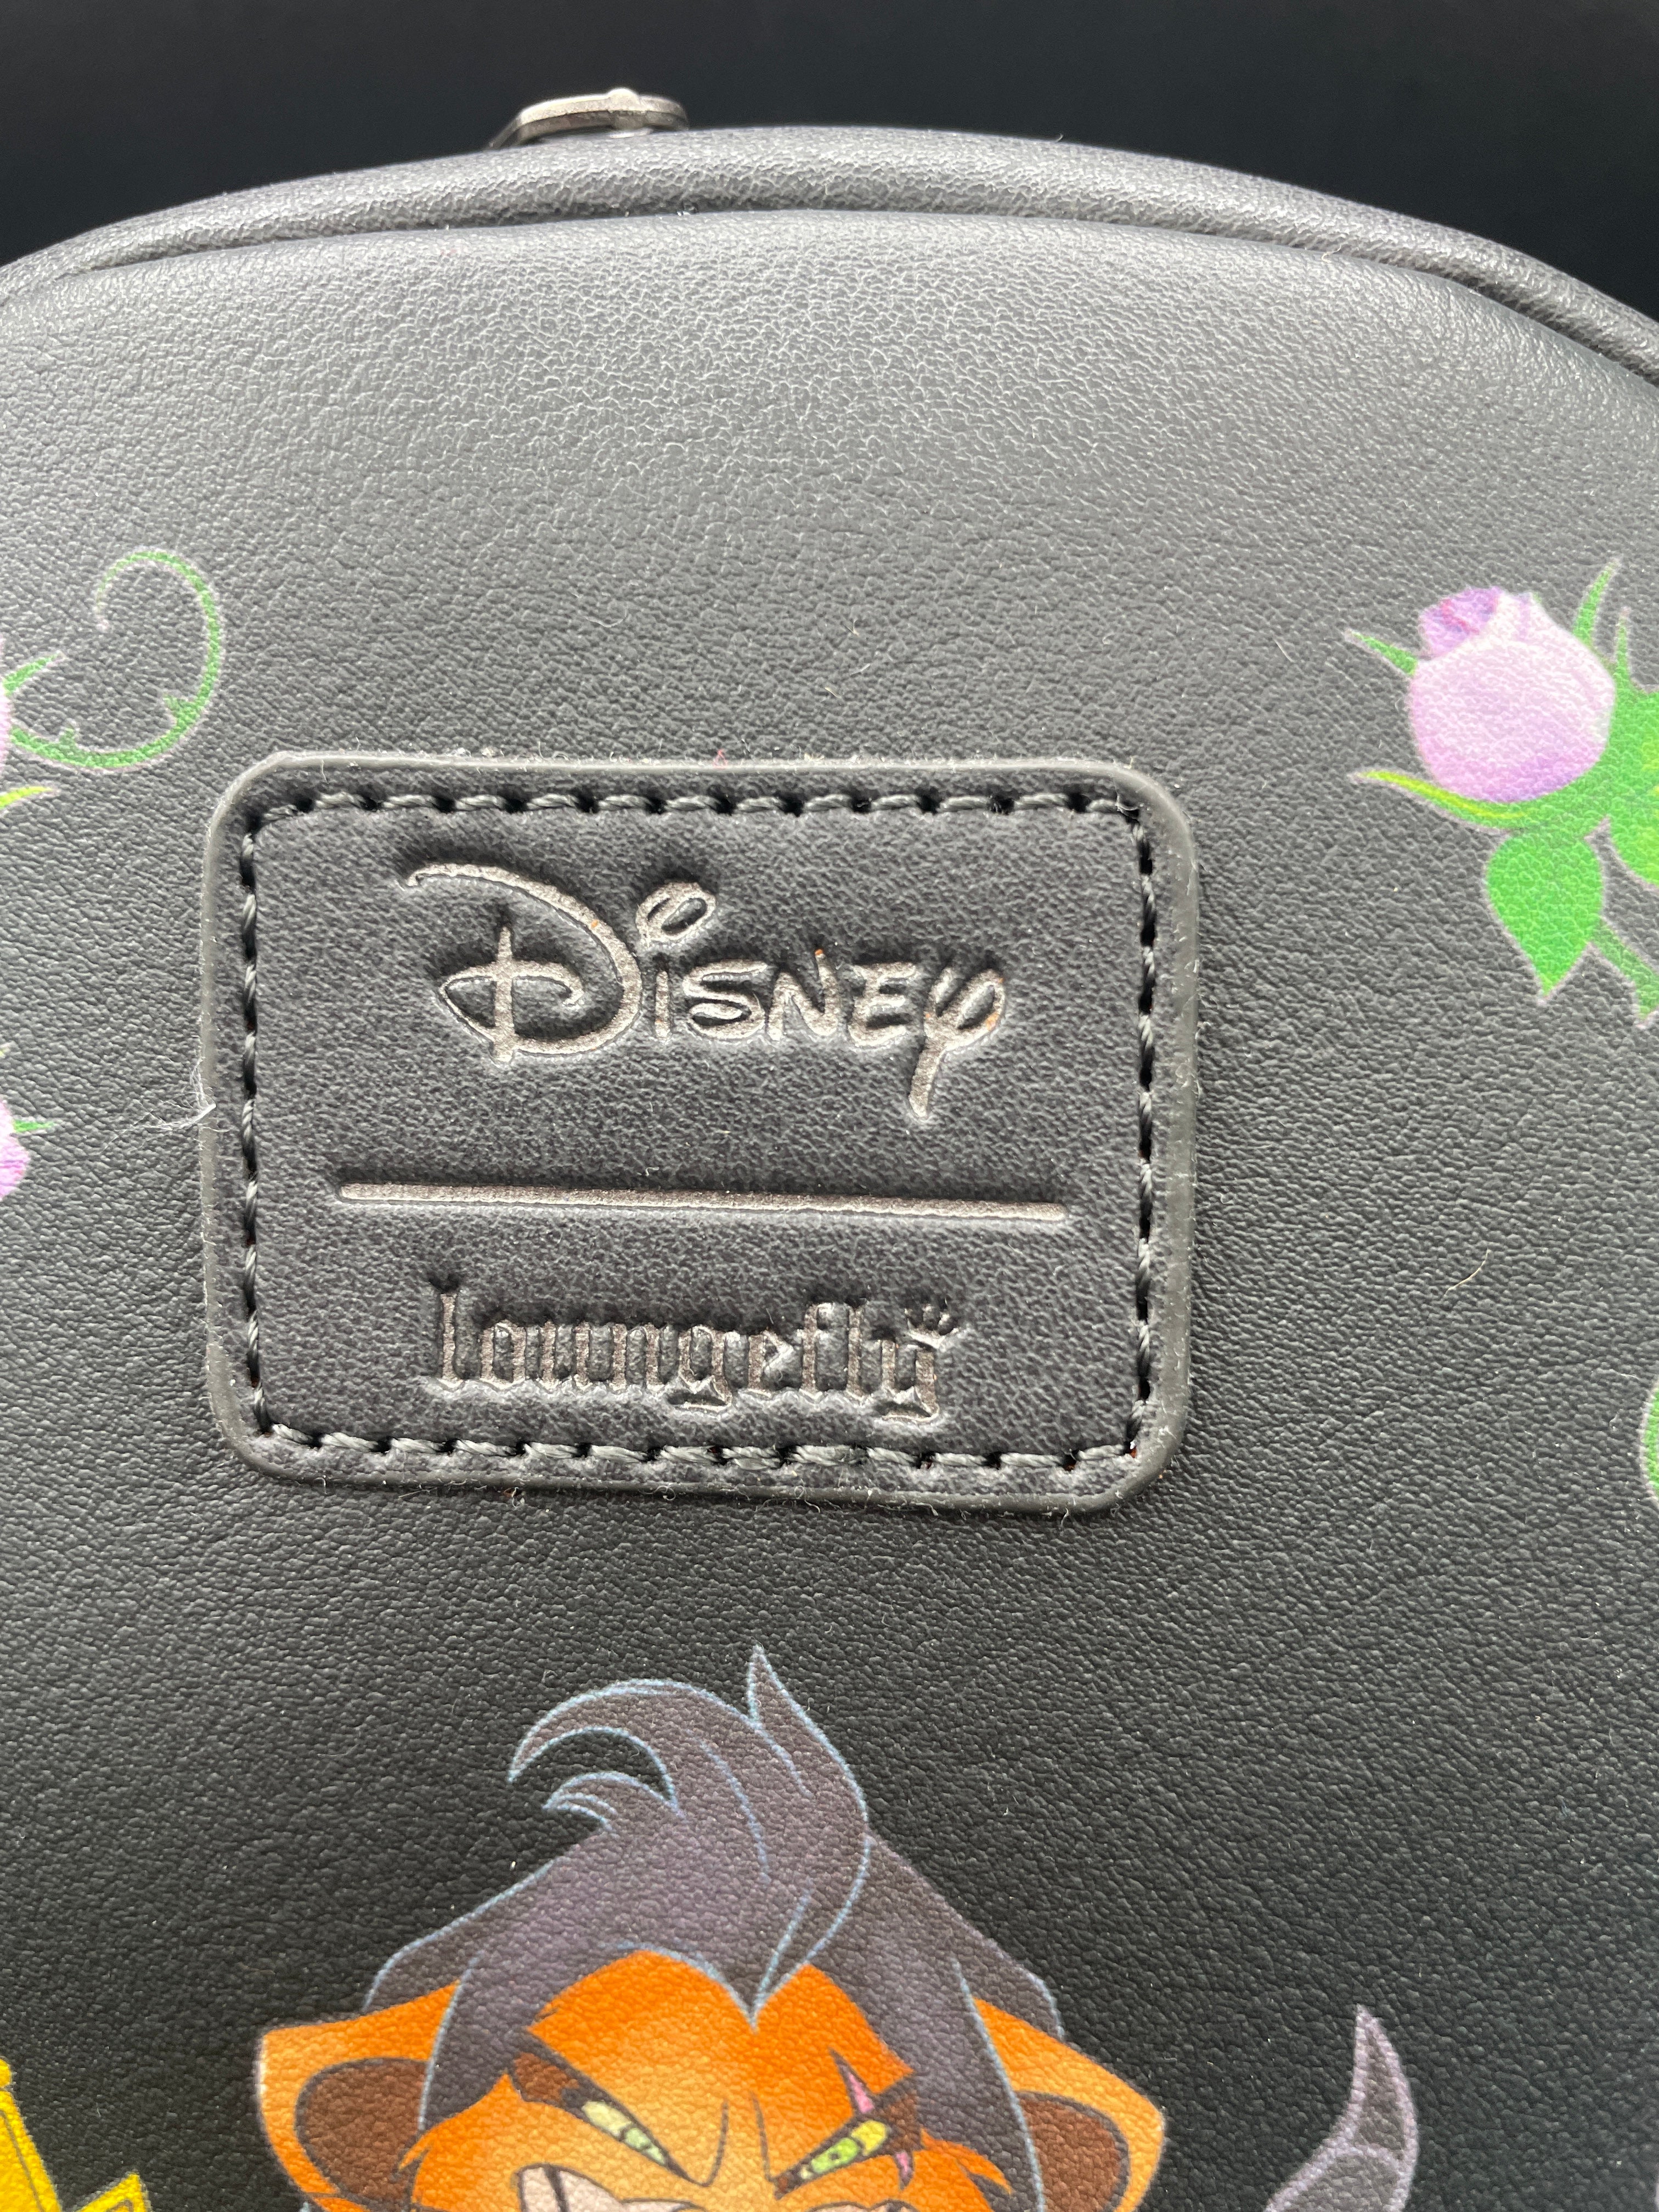 Loungefly Disney Villains Floral Backpack